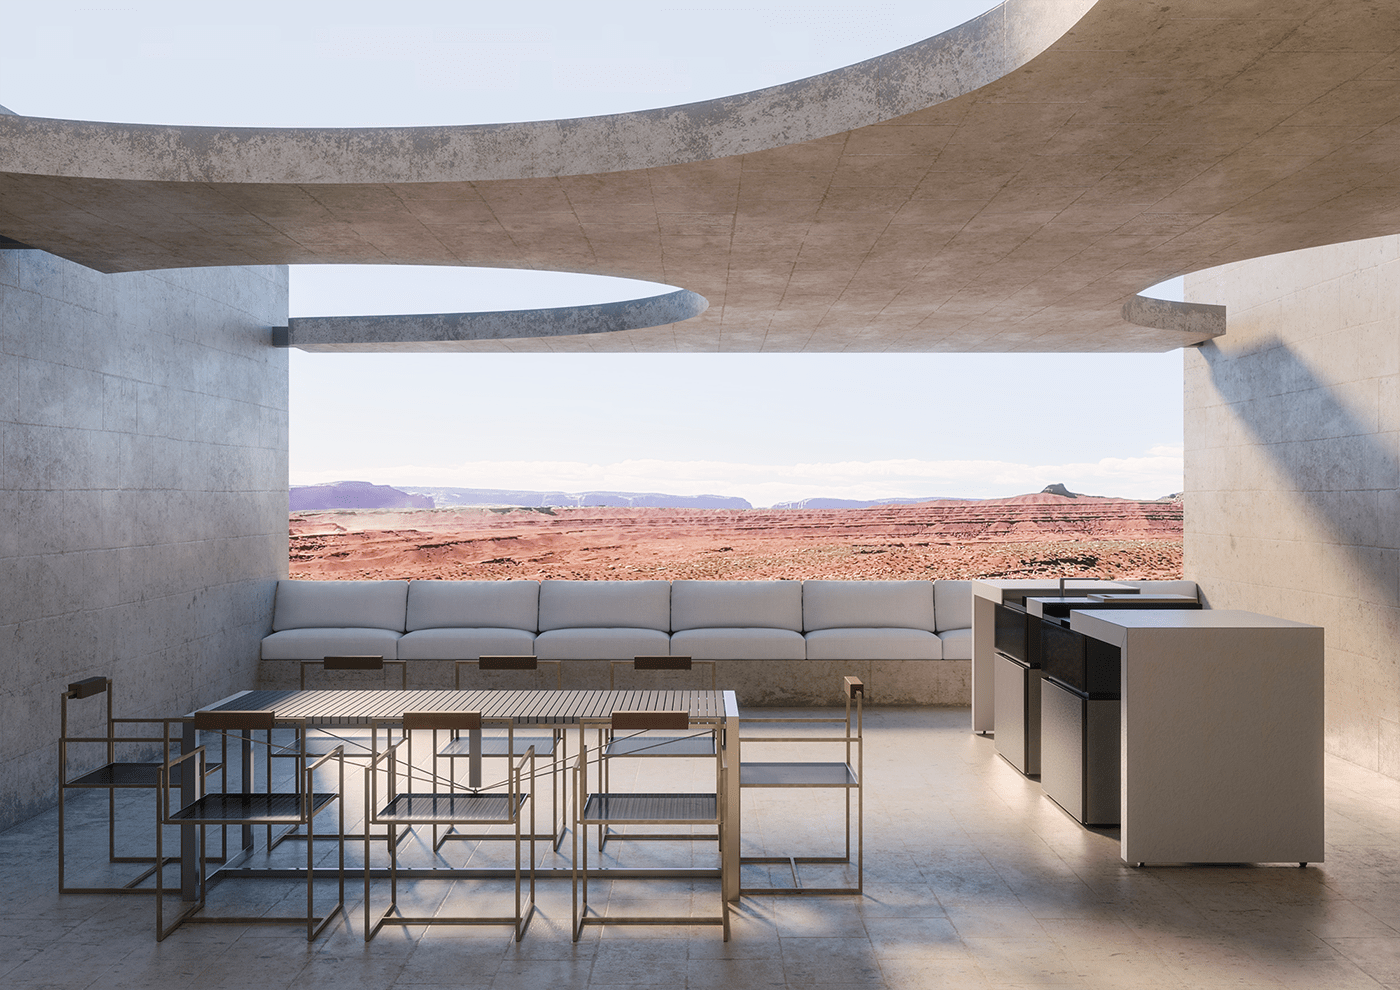 Interior design architecture luxury modern decor bedroom kitchen metal MADEINITALY